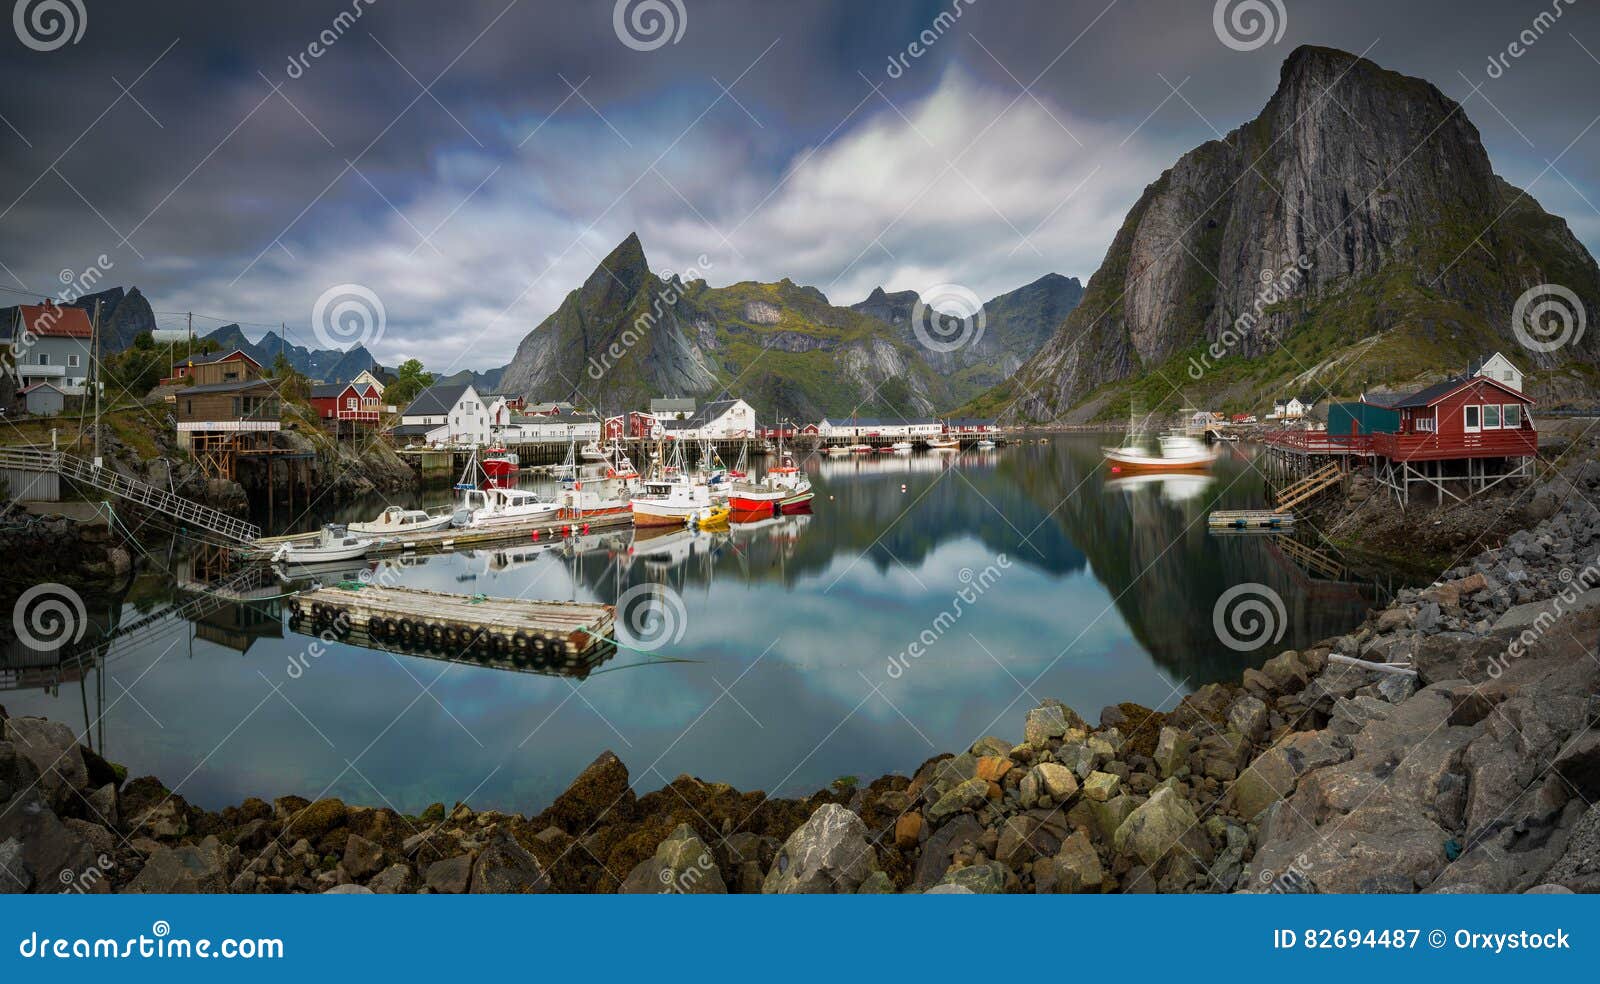 traditional norwegian fishing harbor of the island hamnoy